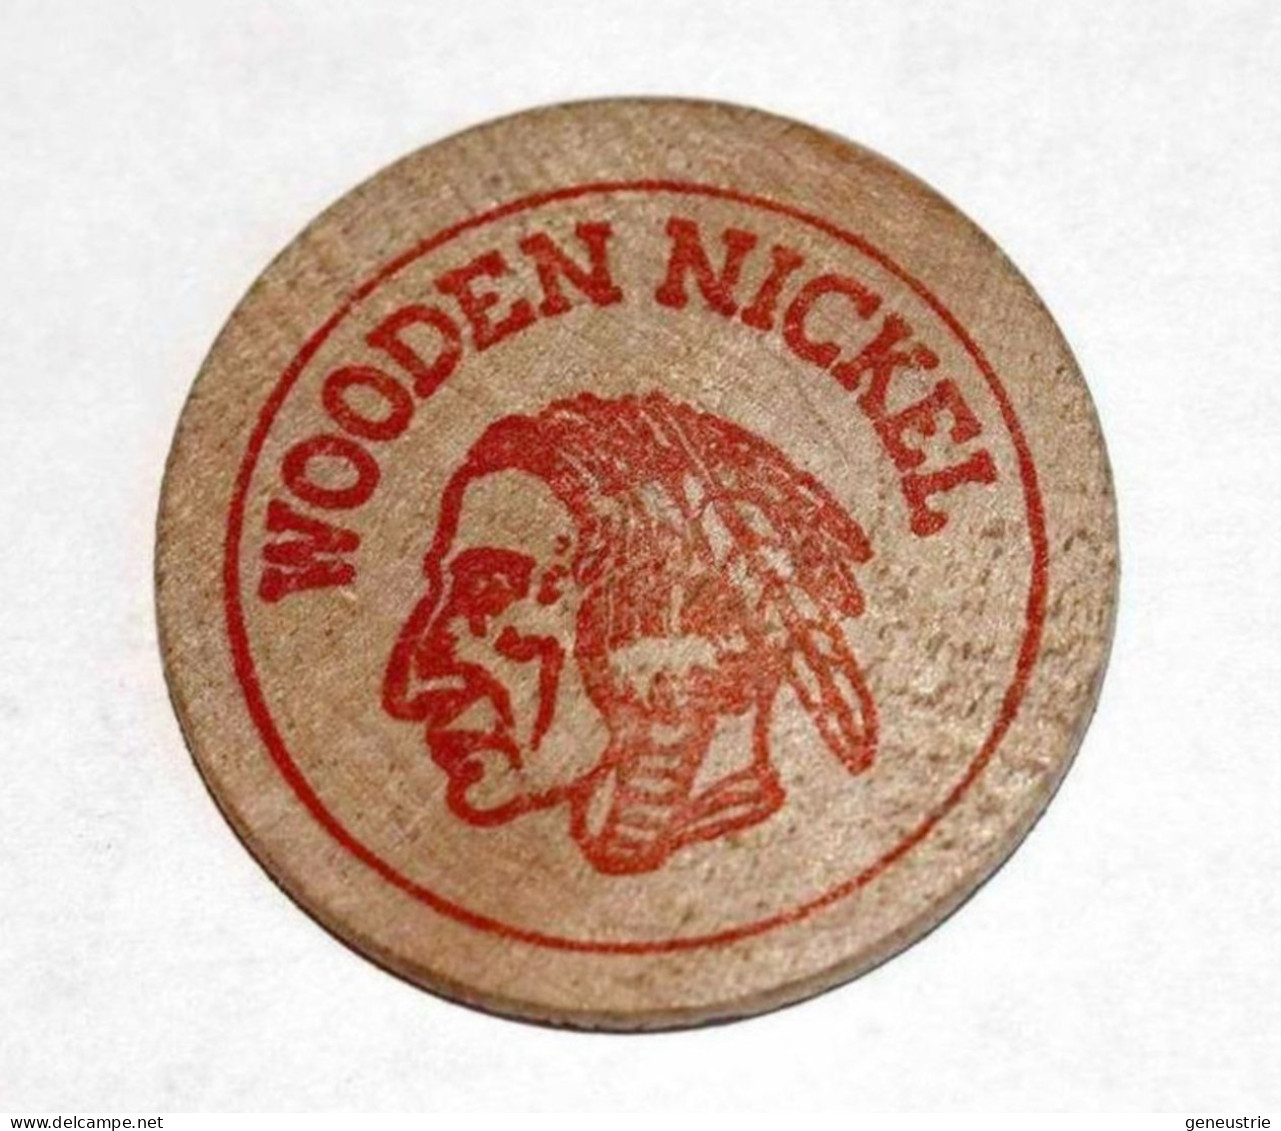 Wooden Nickel - Jeton Bois 1979 Monnaie Tête D'Indien - The Cola Clan Houston - Coca Cola - Etats-Unis - Wooden Token - Notgeld